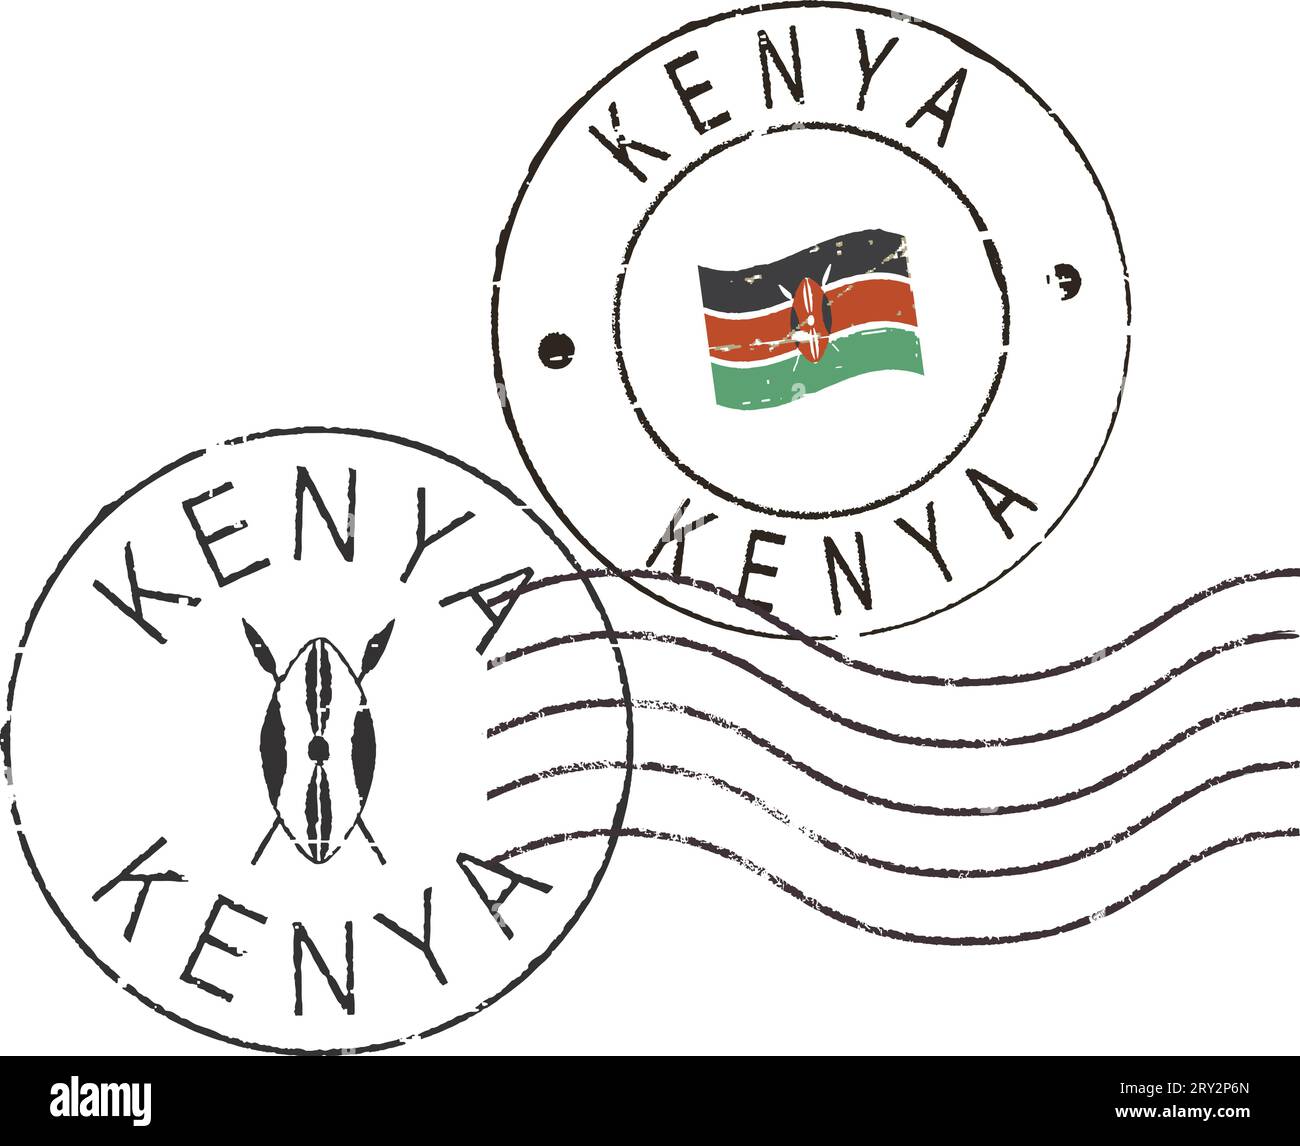 Postal grunge stamps 'Kenya'. Stock Vector